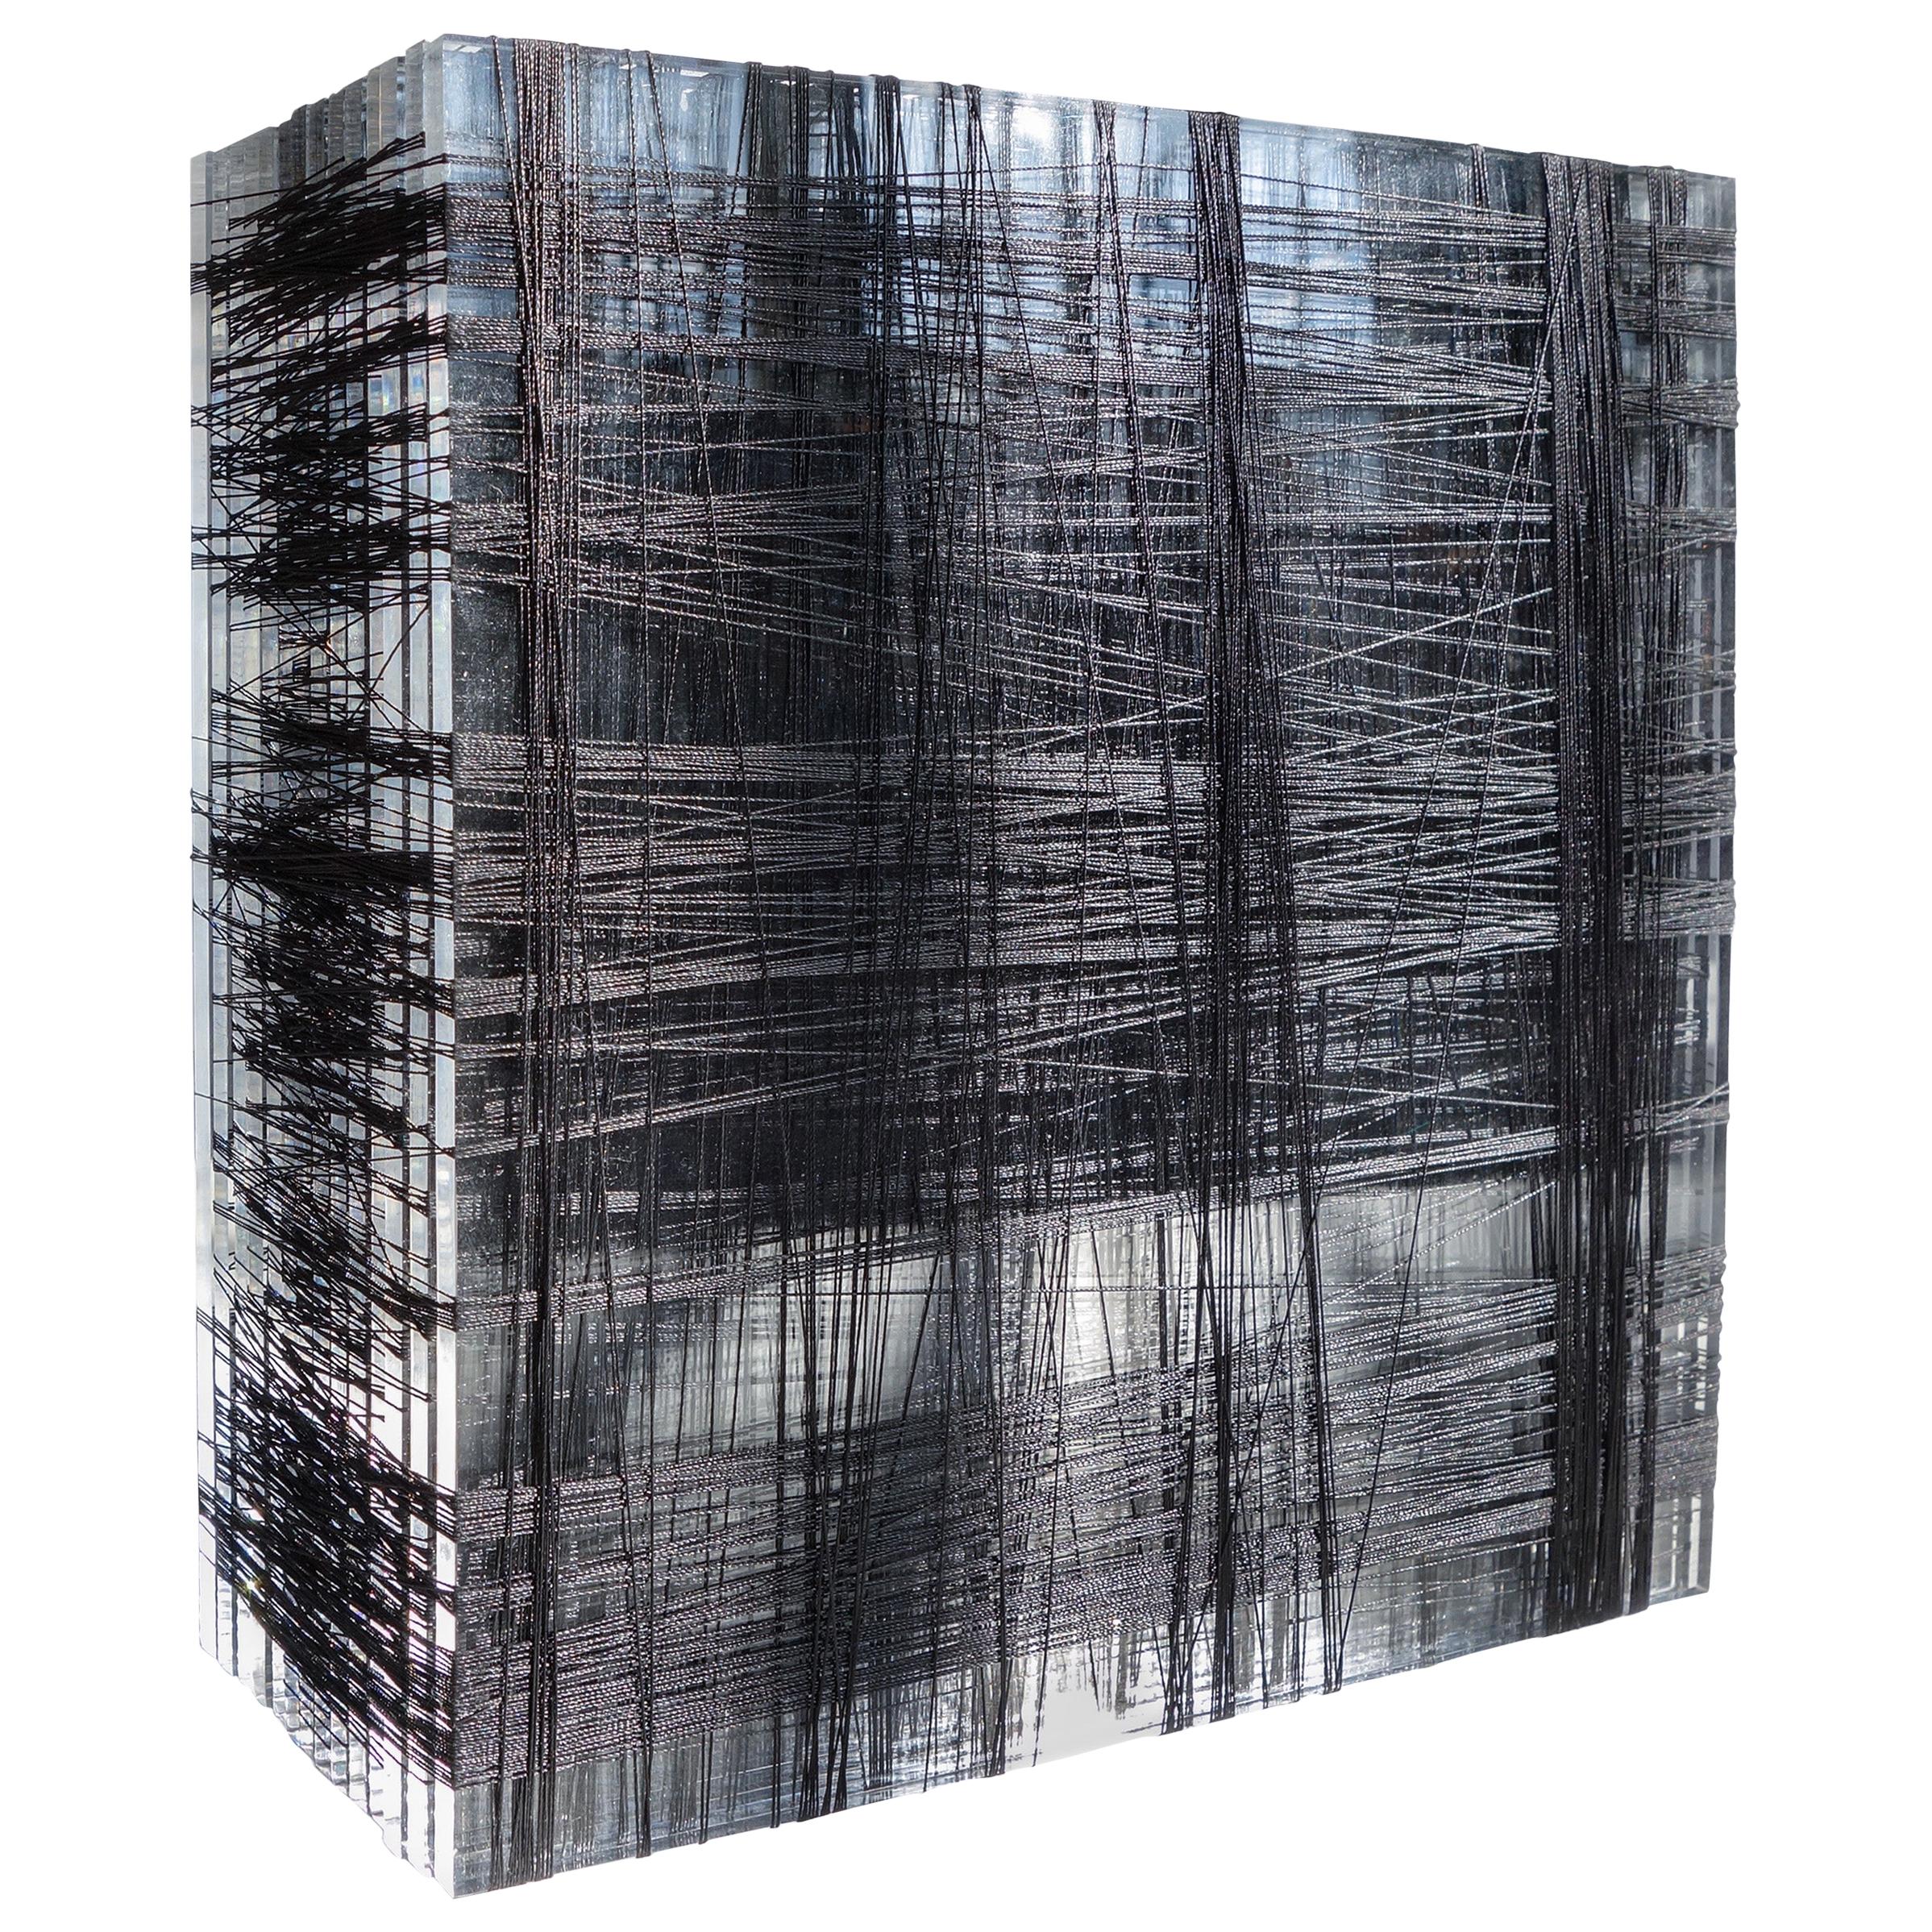 Patrick Carrara Plexiglass Sculpture #3, 400-600 YDS Series, 2013